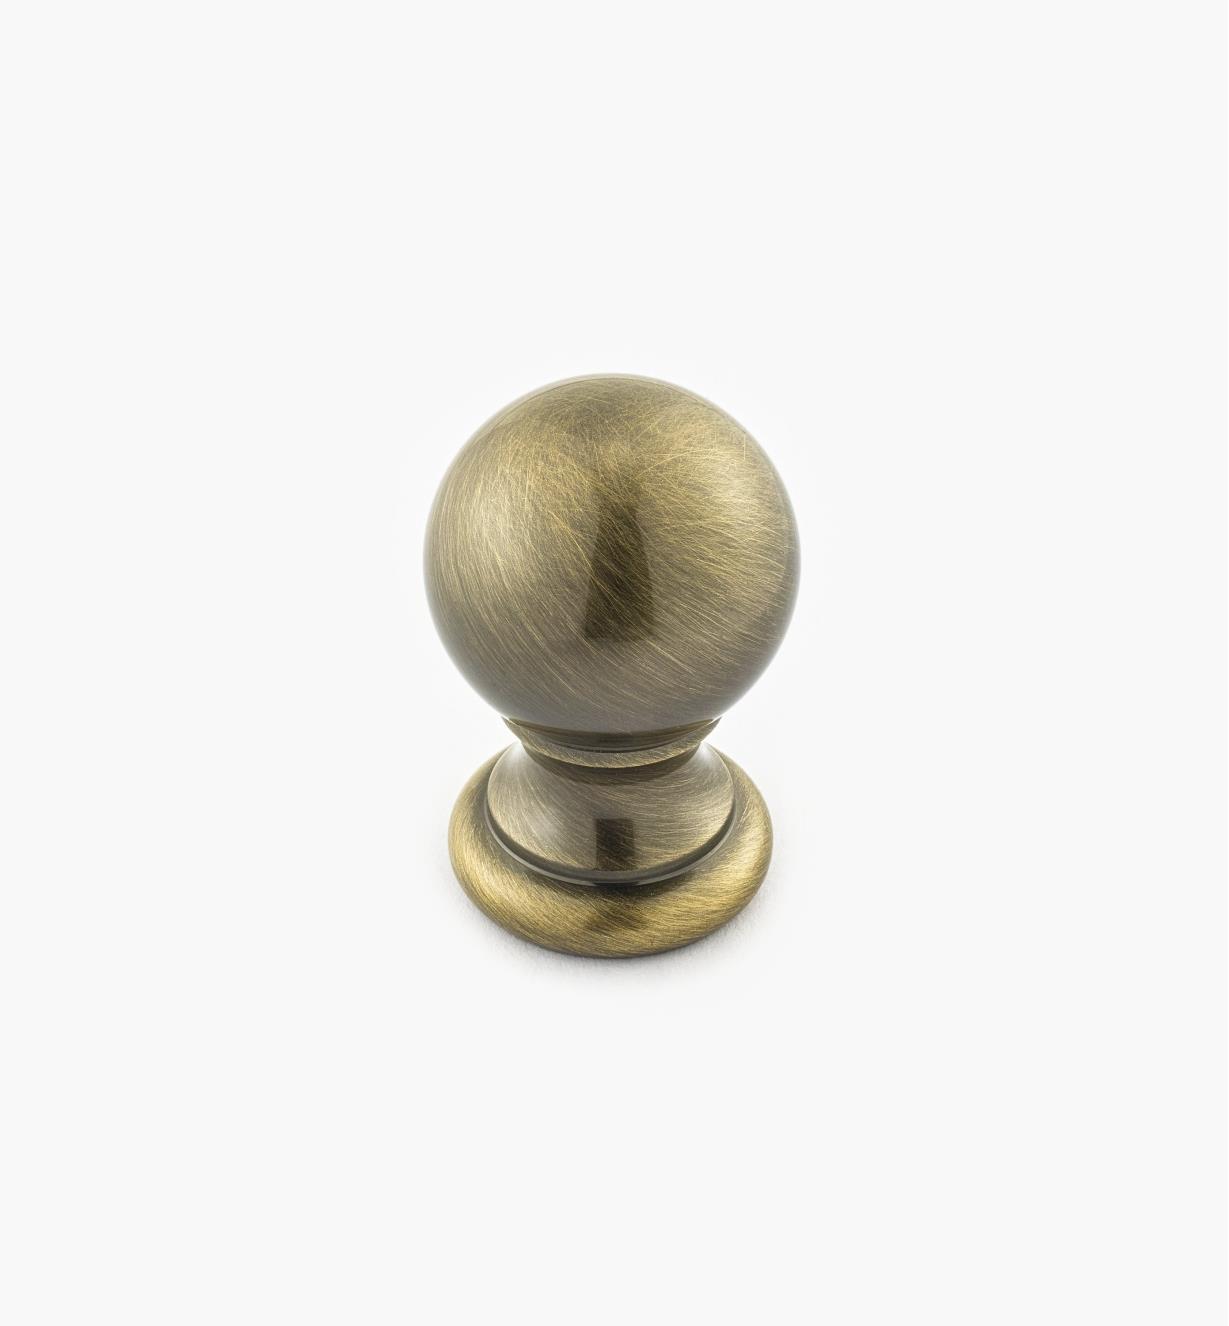 02W3223 - Antique Brass Suite - 7/8" x 1 1/4" Turned Brass Ball Knob